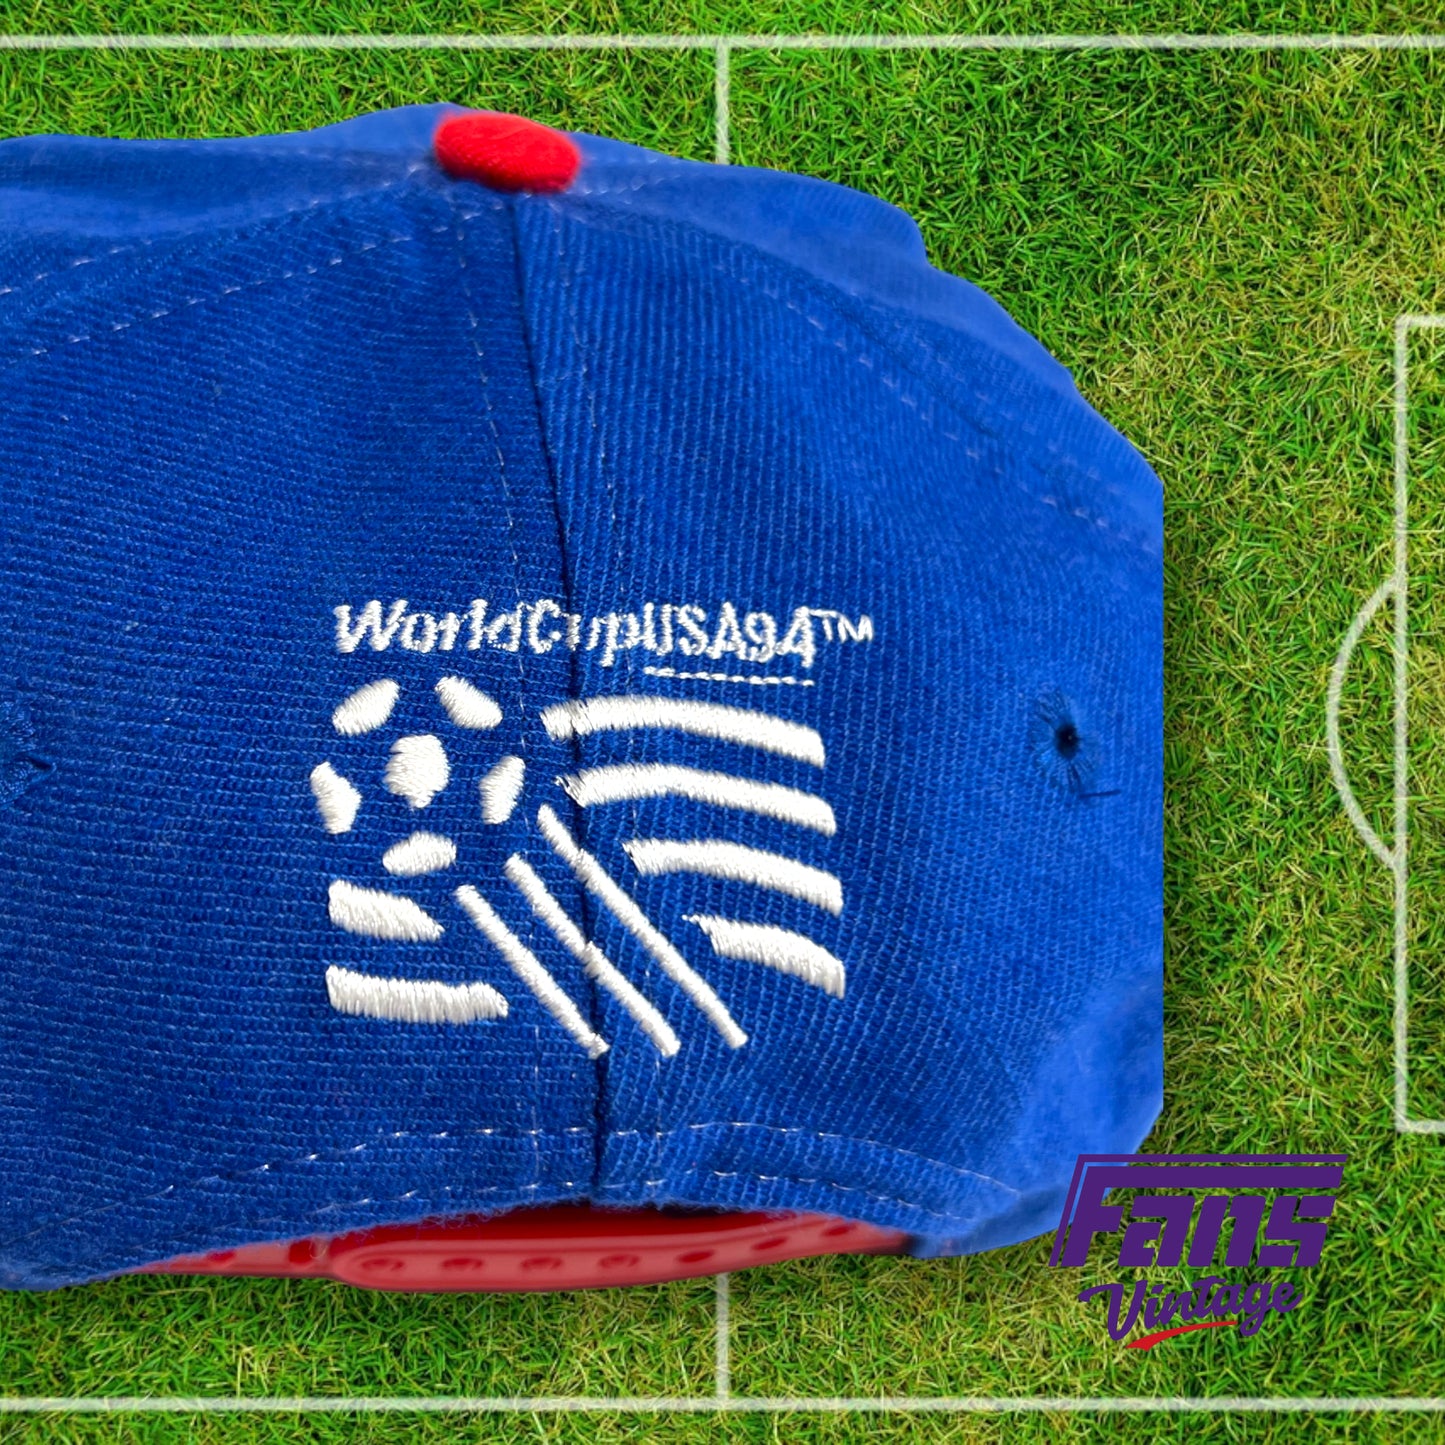 90s vintage Apex USA World Cup snapback hat